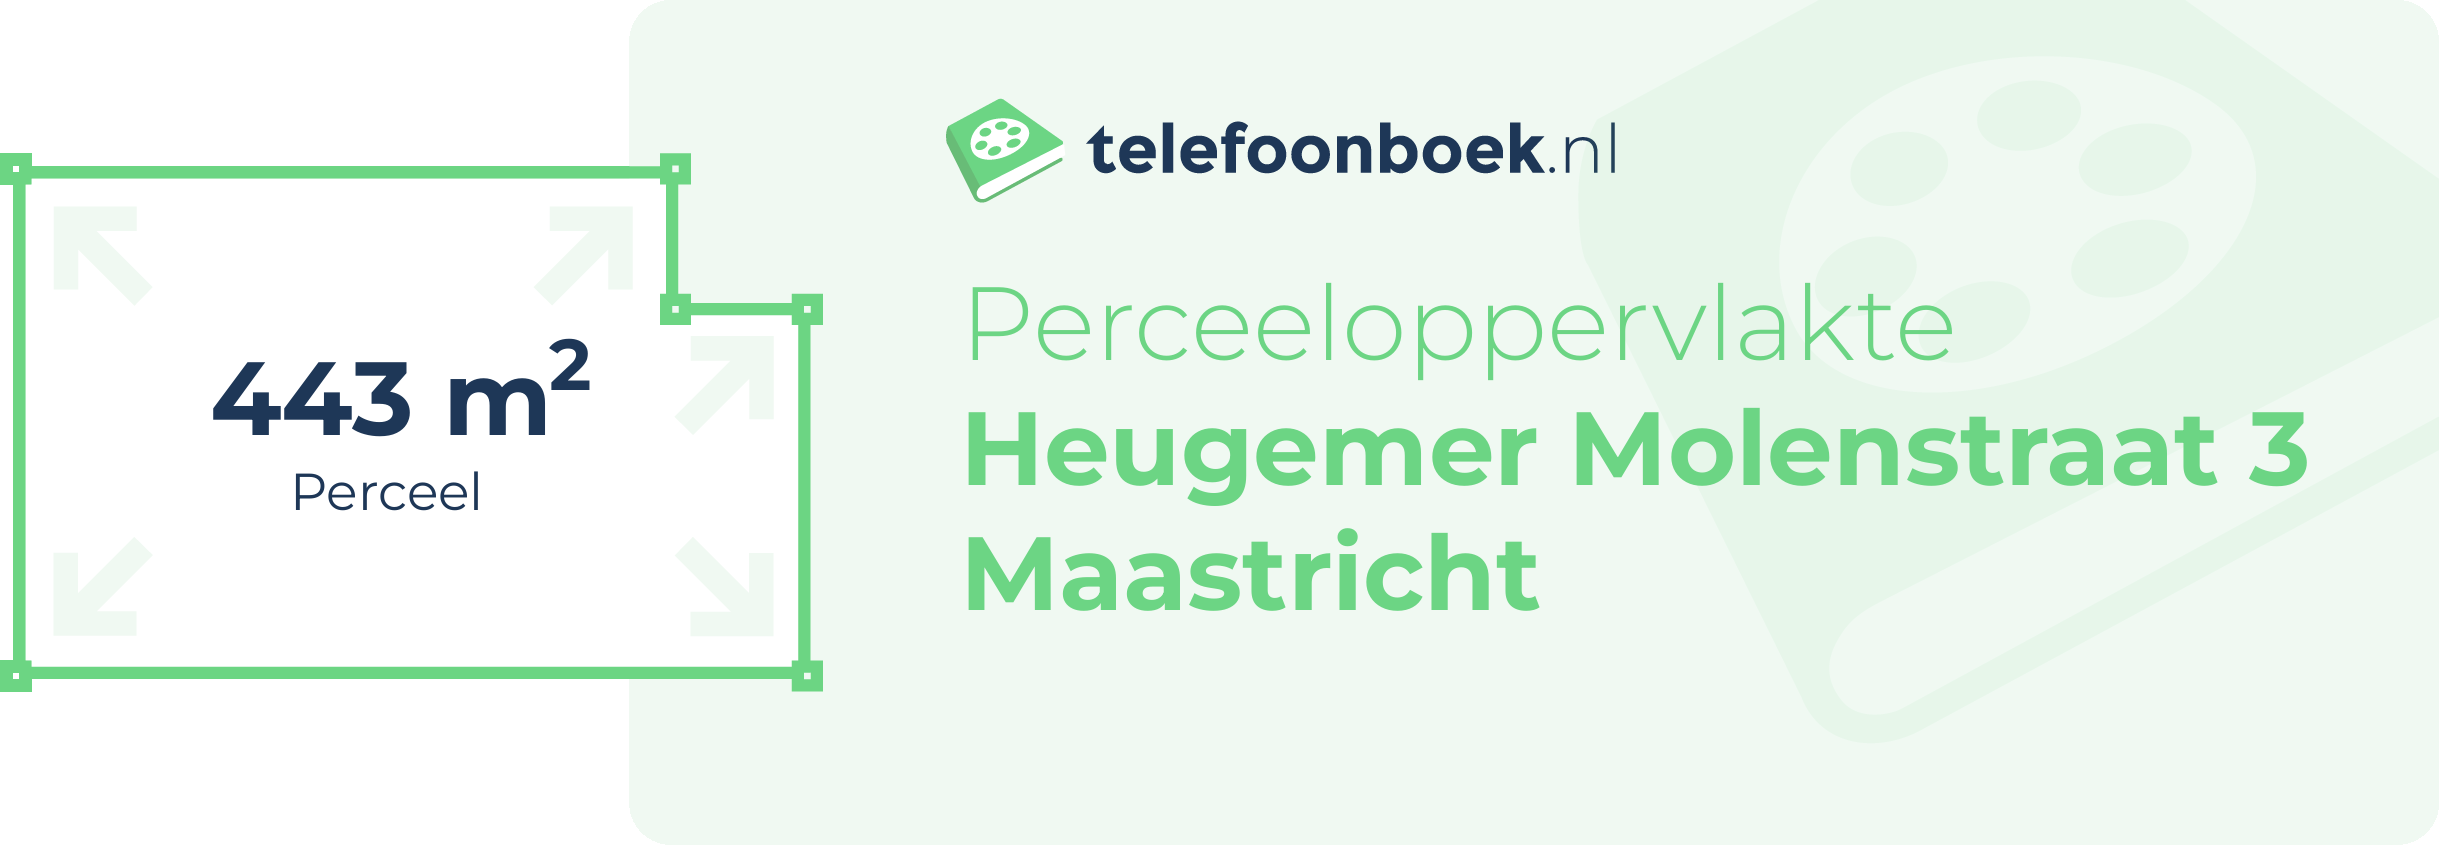 Perceeloppervlakte Heugemer Molenstraat 3 Maastricht